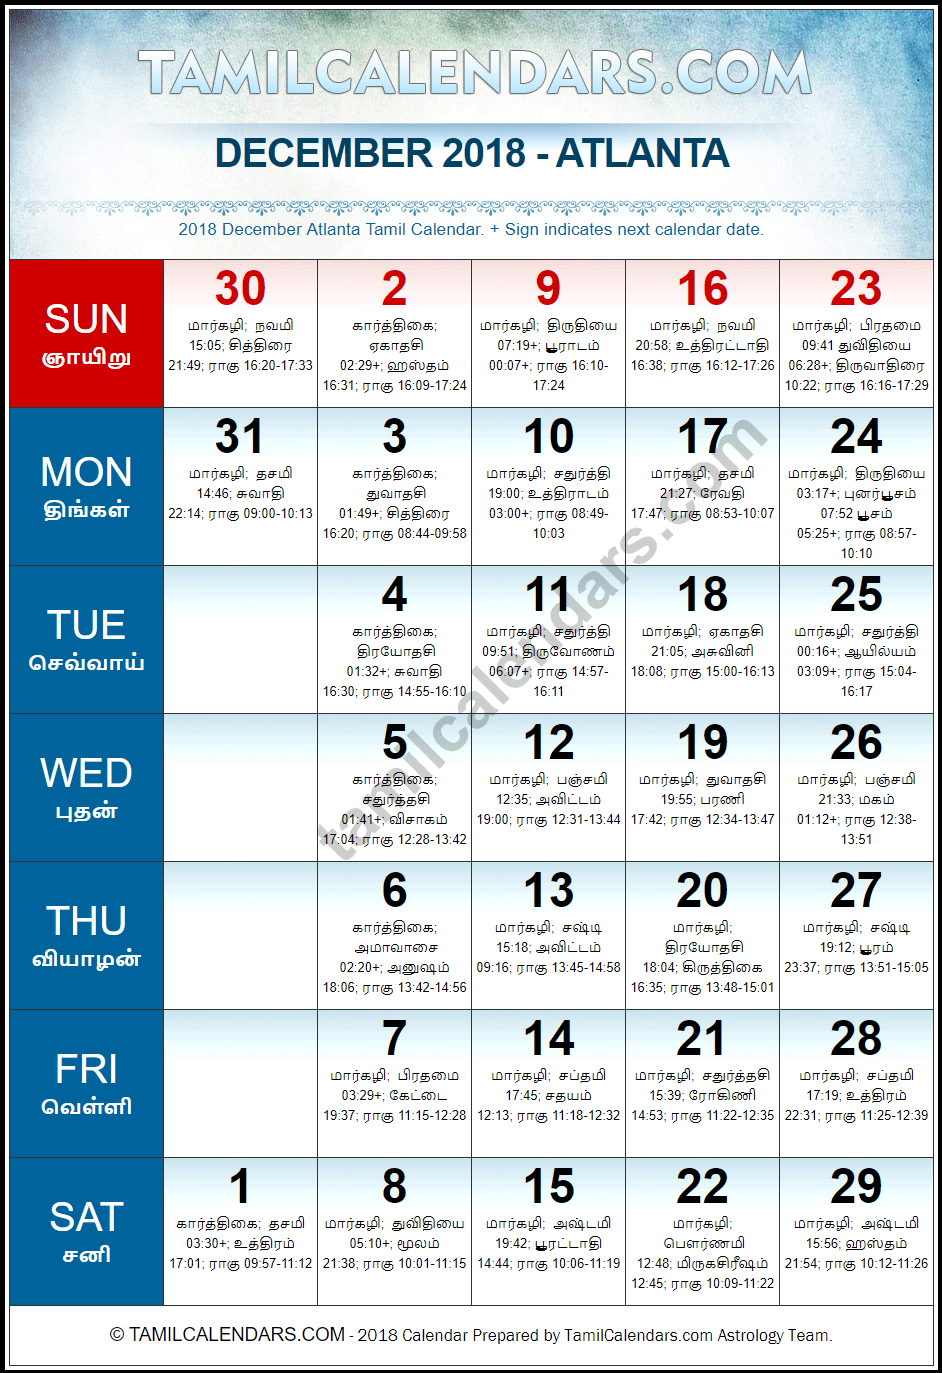 December 2018 Tamil Calendar for Atlanta, USA